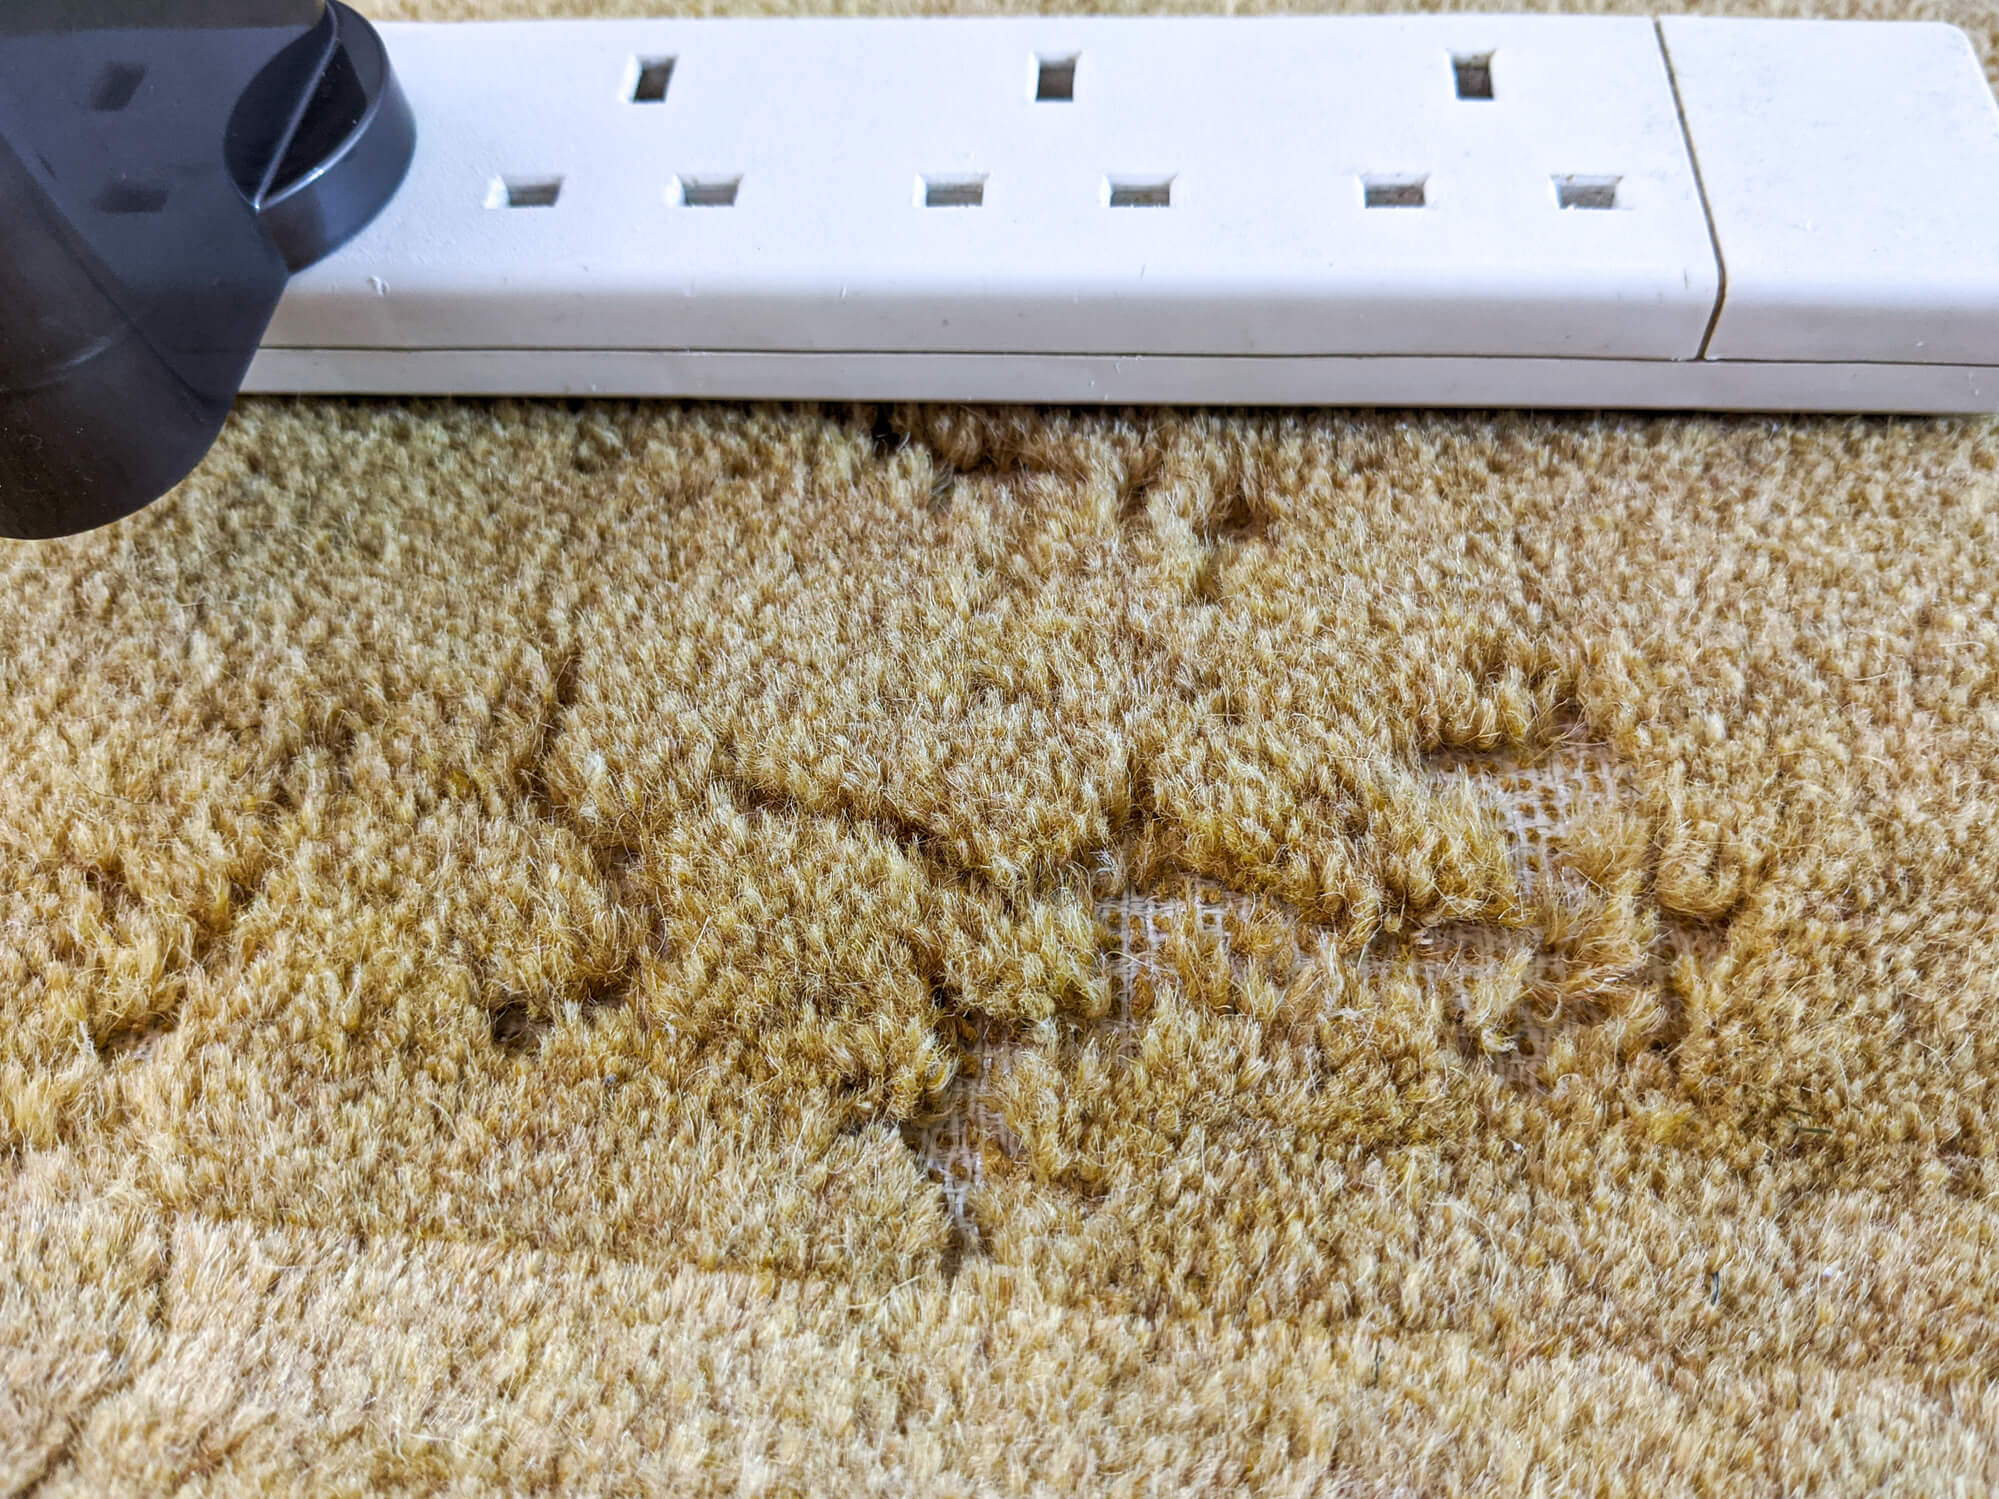 Damaged Carpet caused by Moth infestation